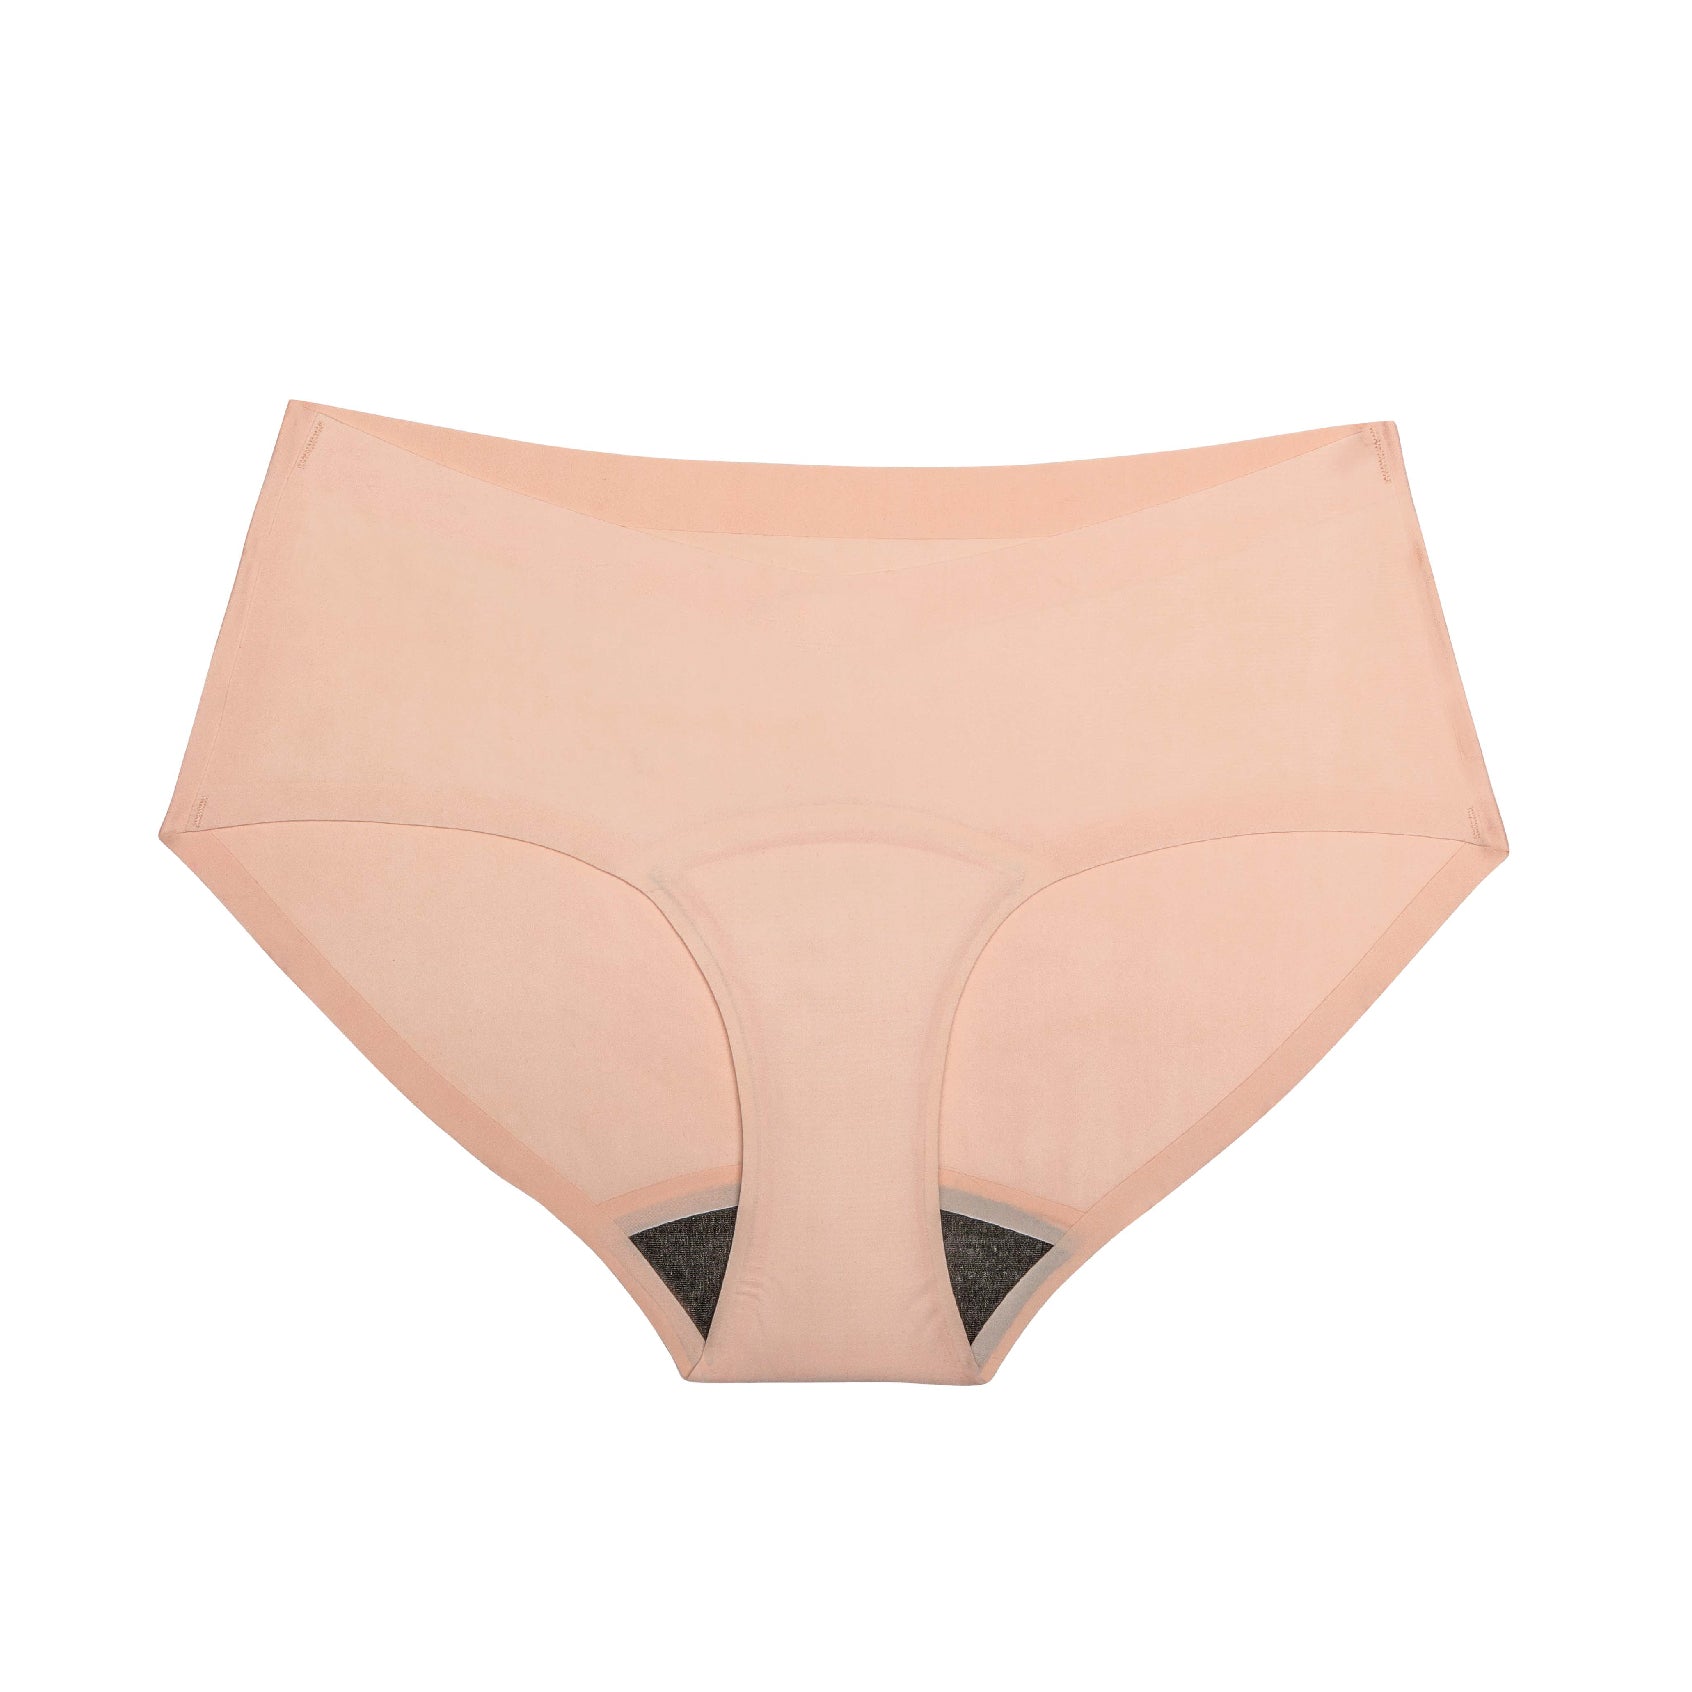 Period Underwear Seamless Incontinence Underwear Bikini Period Panties Leak  Proof Underwear for Women 30ml Absorbency 1 Pack (Large, 1 Black)